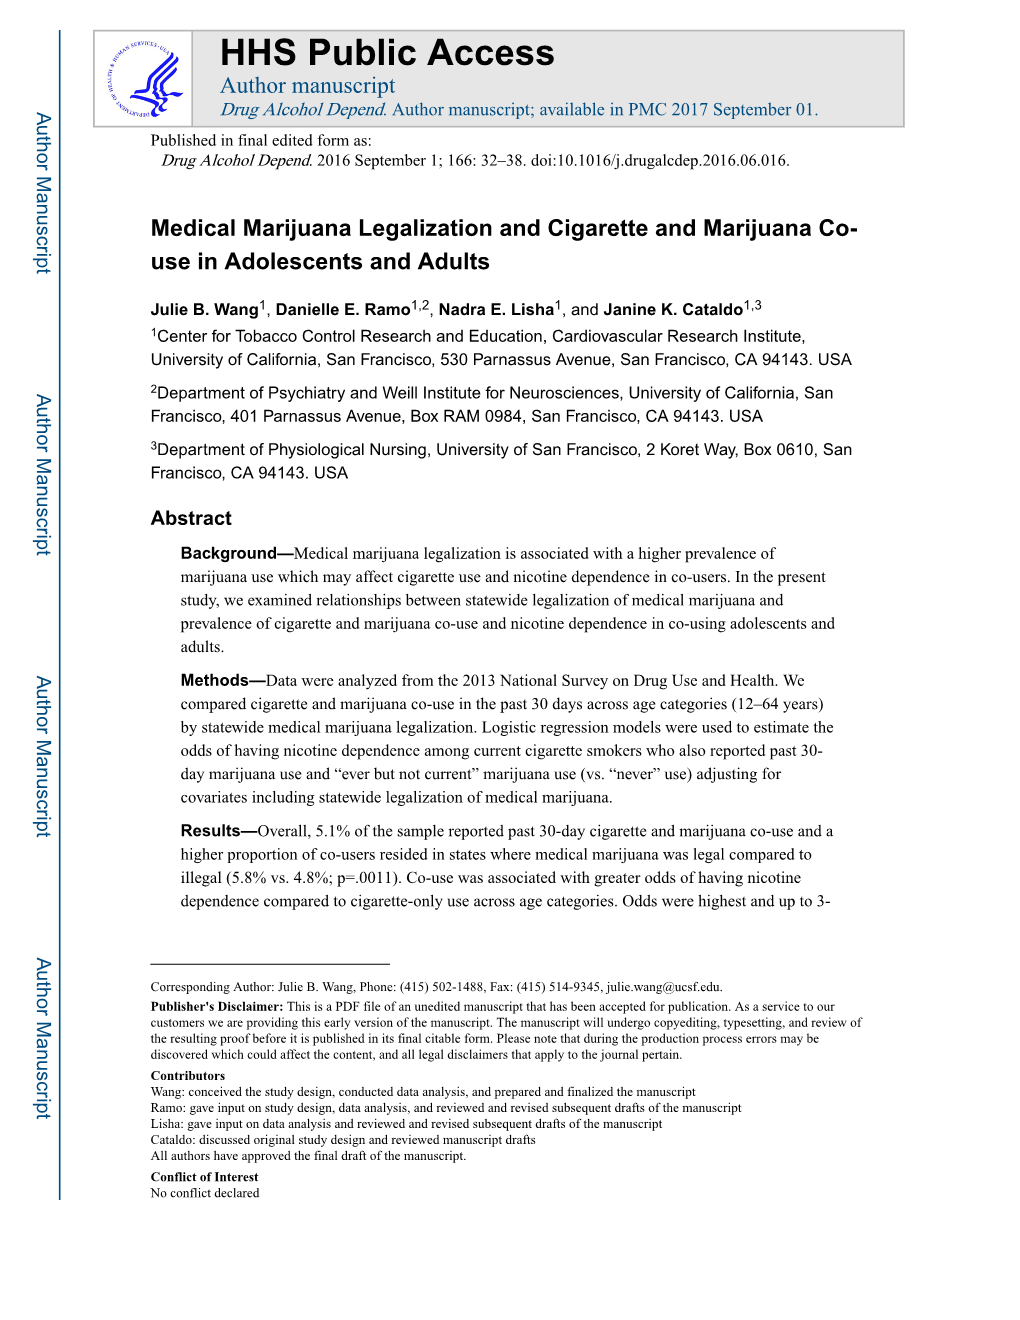 Medical Marijuana Legalization and Cigarette and Marijuana Co-Use In